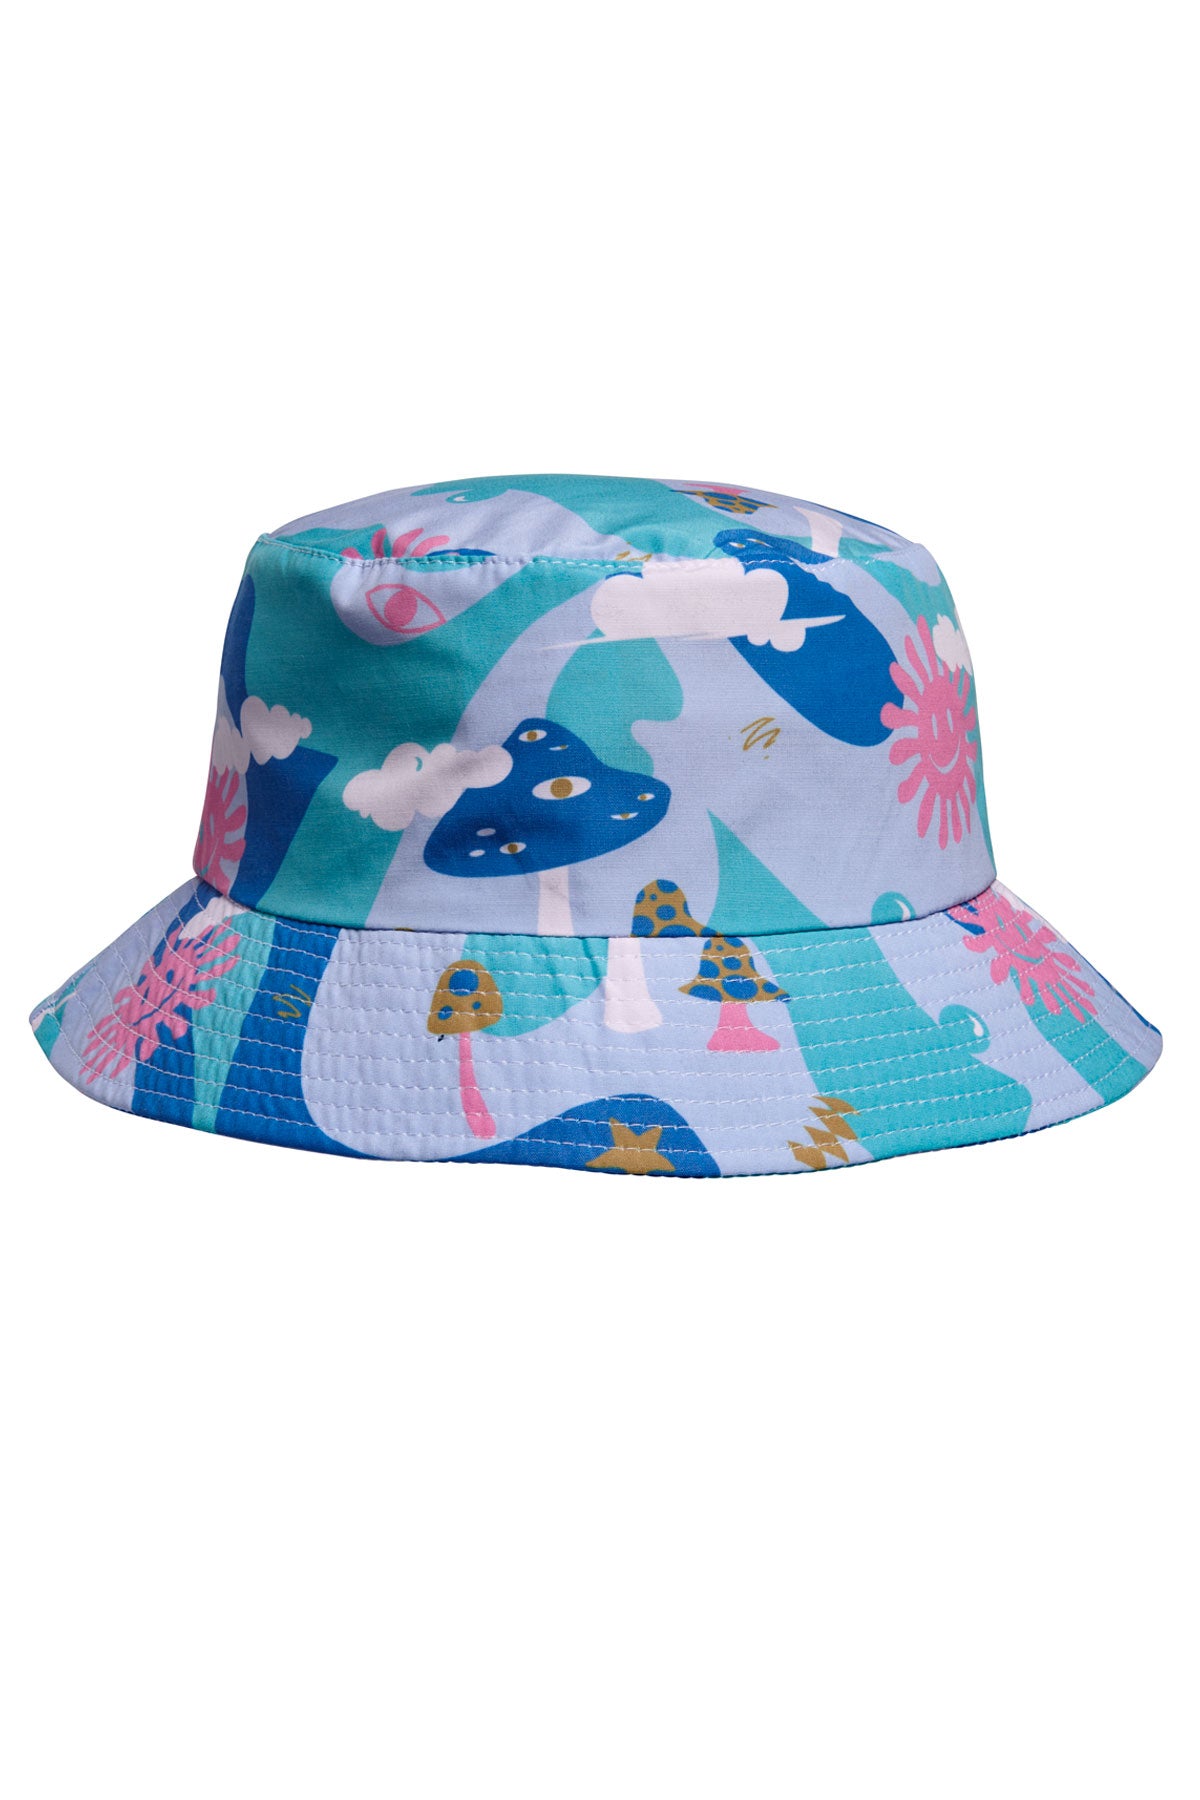 Seaesta Surf | Sunshine Space Bucket Hat | Youth Hats | Eco-Friendly Children's Beachwear & Accessories | Large